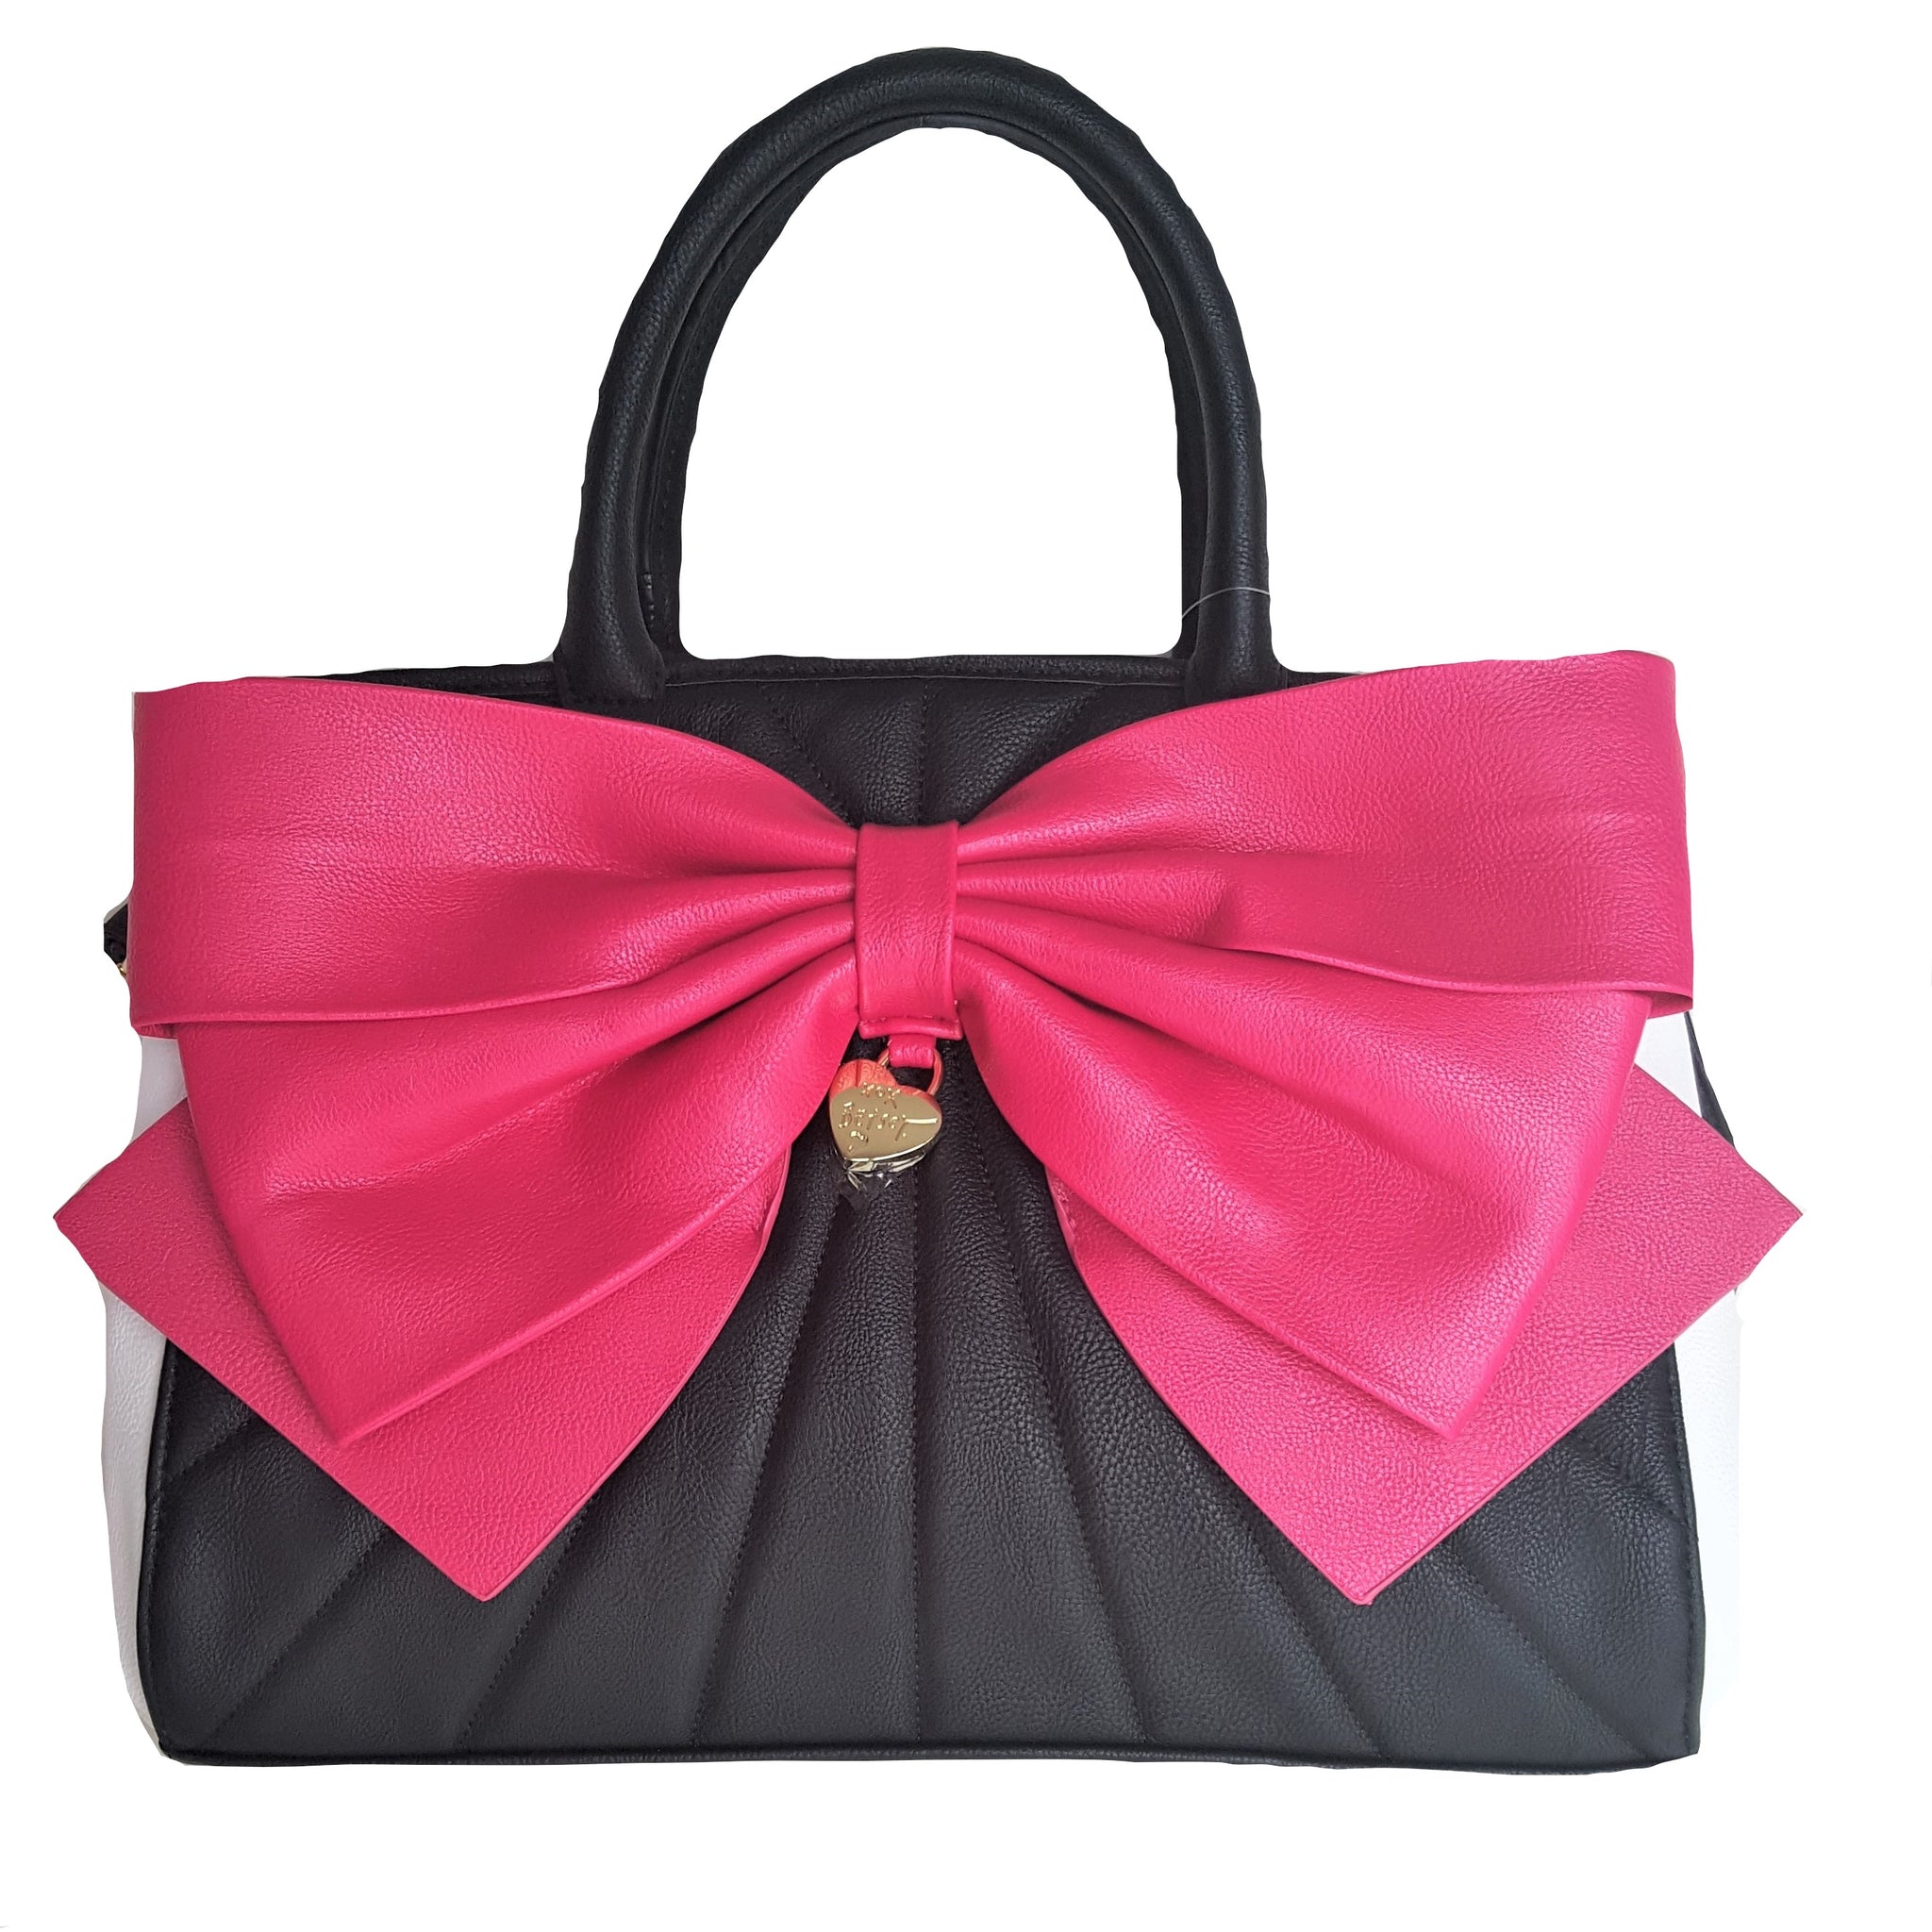 Betsey Johnson - Pink & Brown Purse Bag w/ Pink Bows | eBay